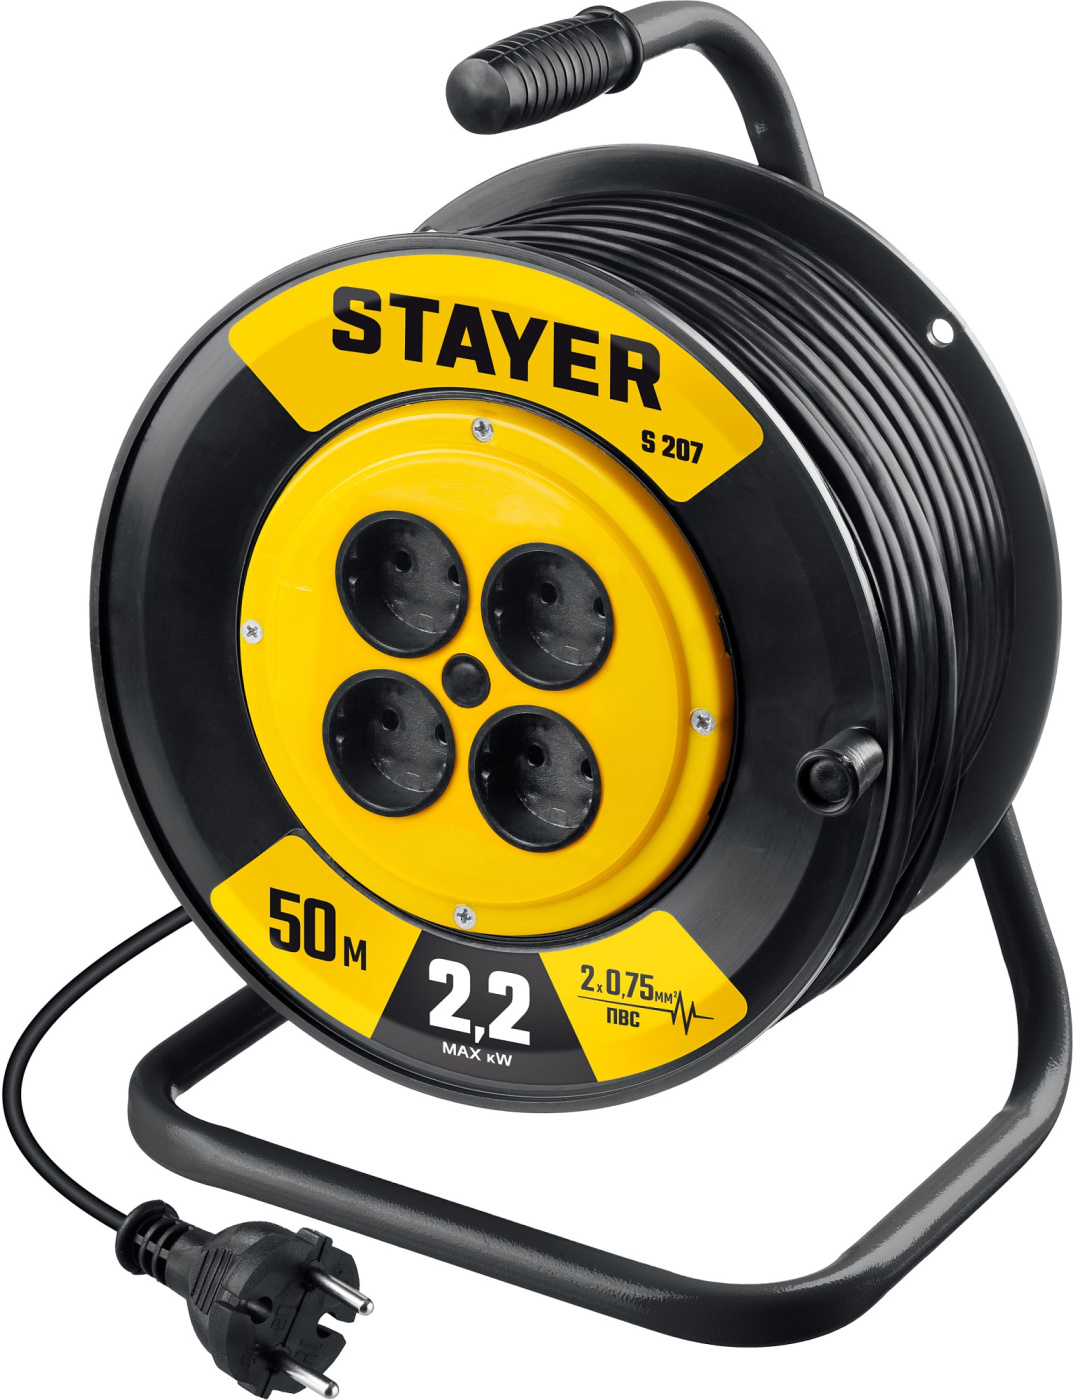 STAYER S-207, ПВС, 2 х 0.75 мм2, 50 м, 2200 Вт, удлинитель на катушке (55073-50)